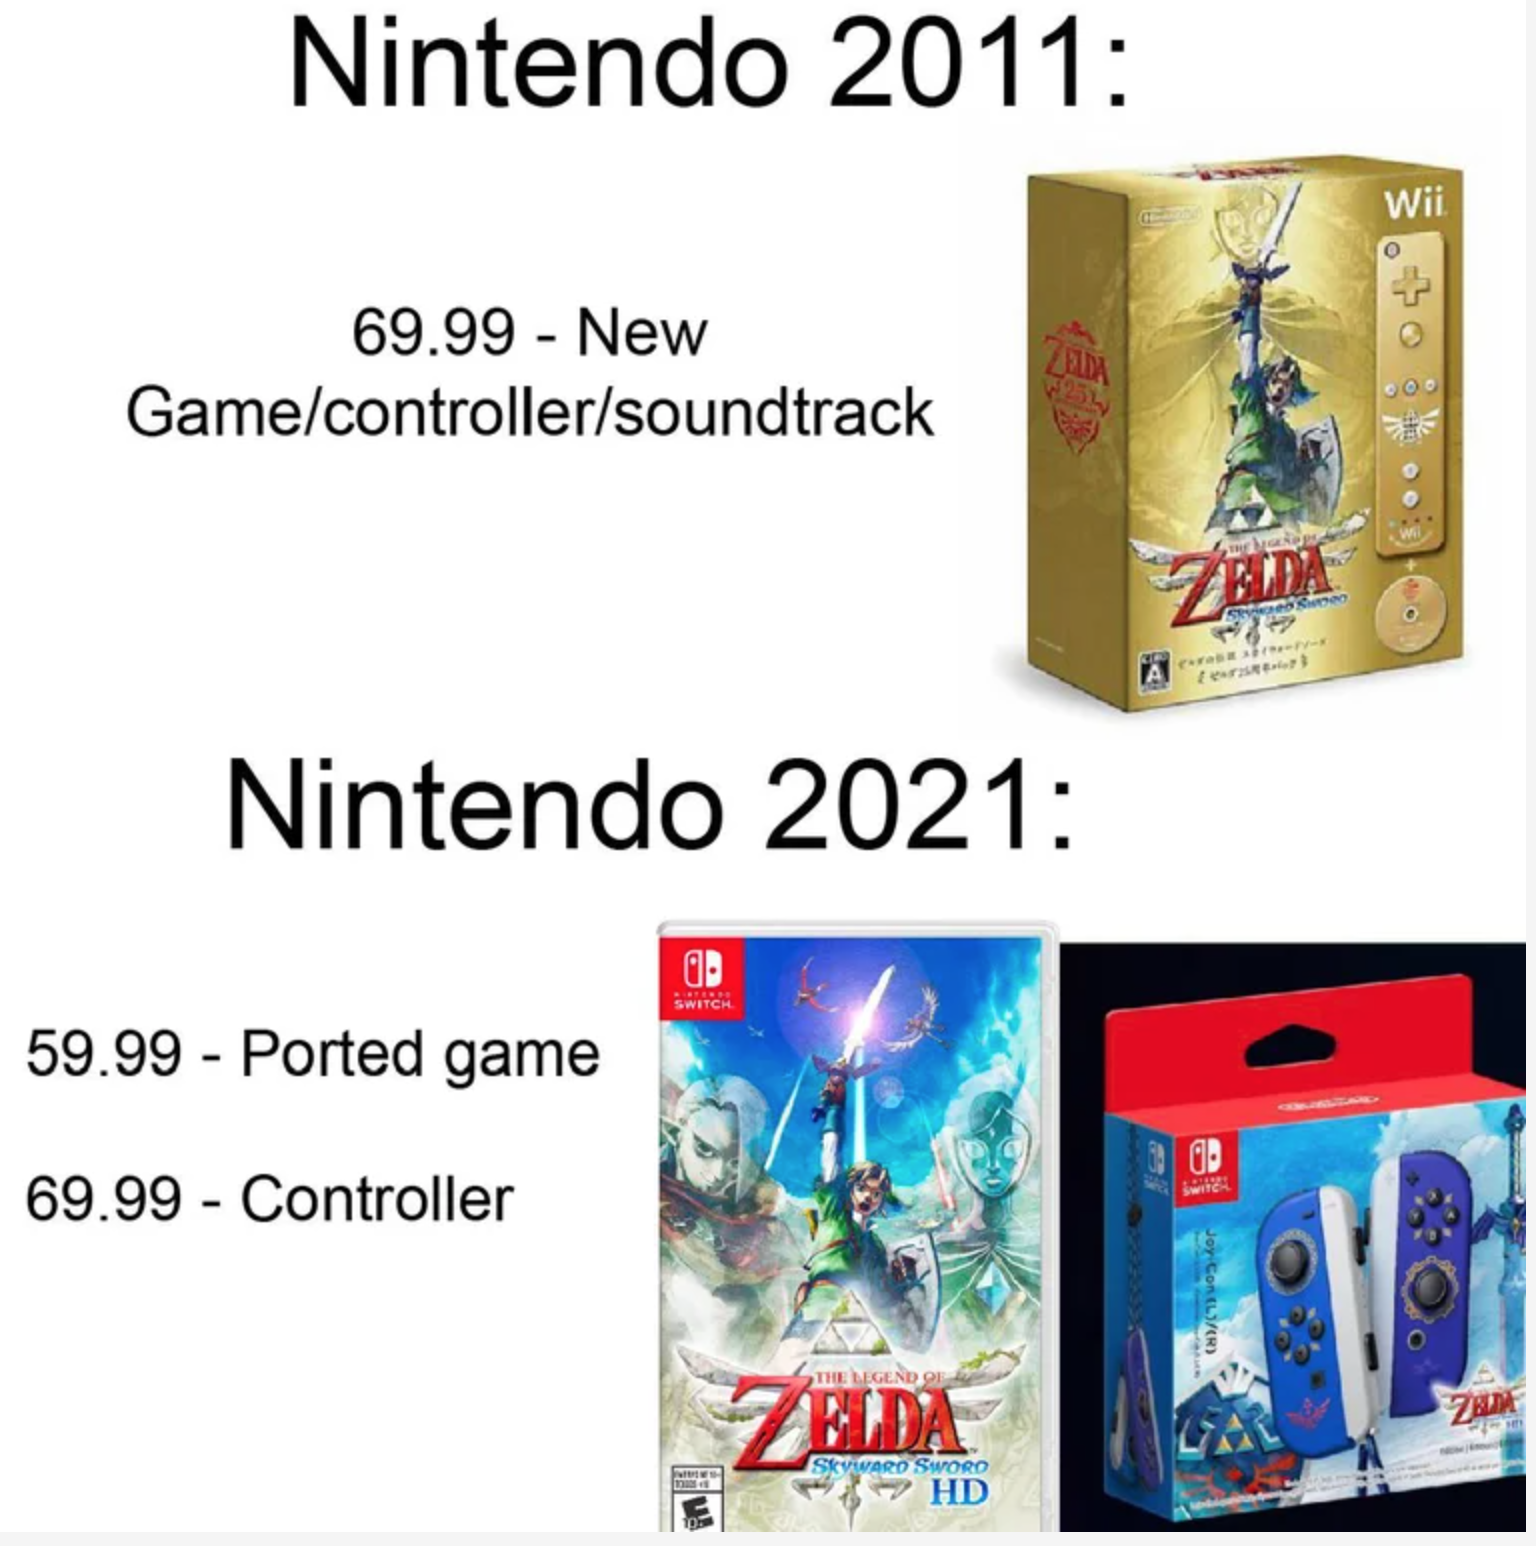 gaming memes and pics - legend of zelda skyward sword - Nintendo 2011 Wii 69.99 New Gamecontrollersoundtrack Zbude Nintendo 2021 59.99 Ported game 69.99 Controller 20. Zelda Hd